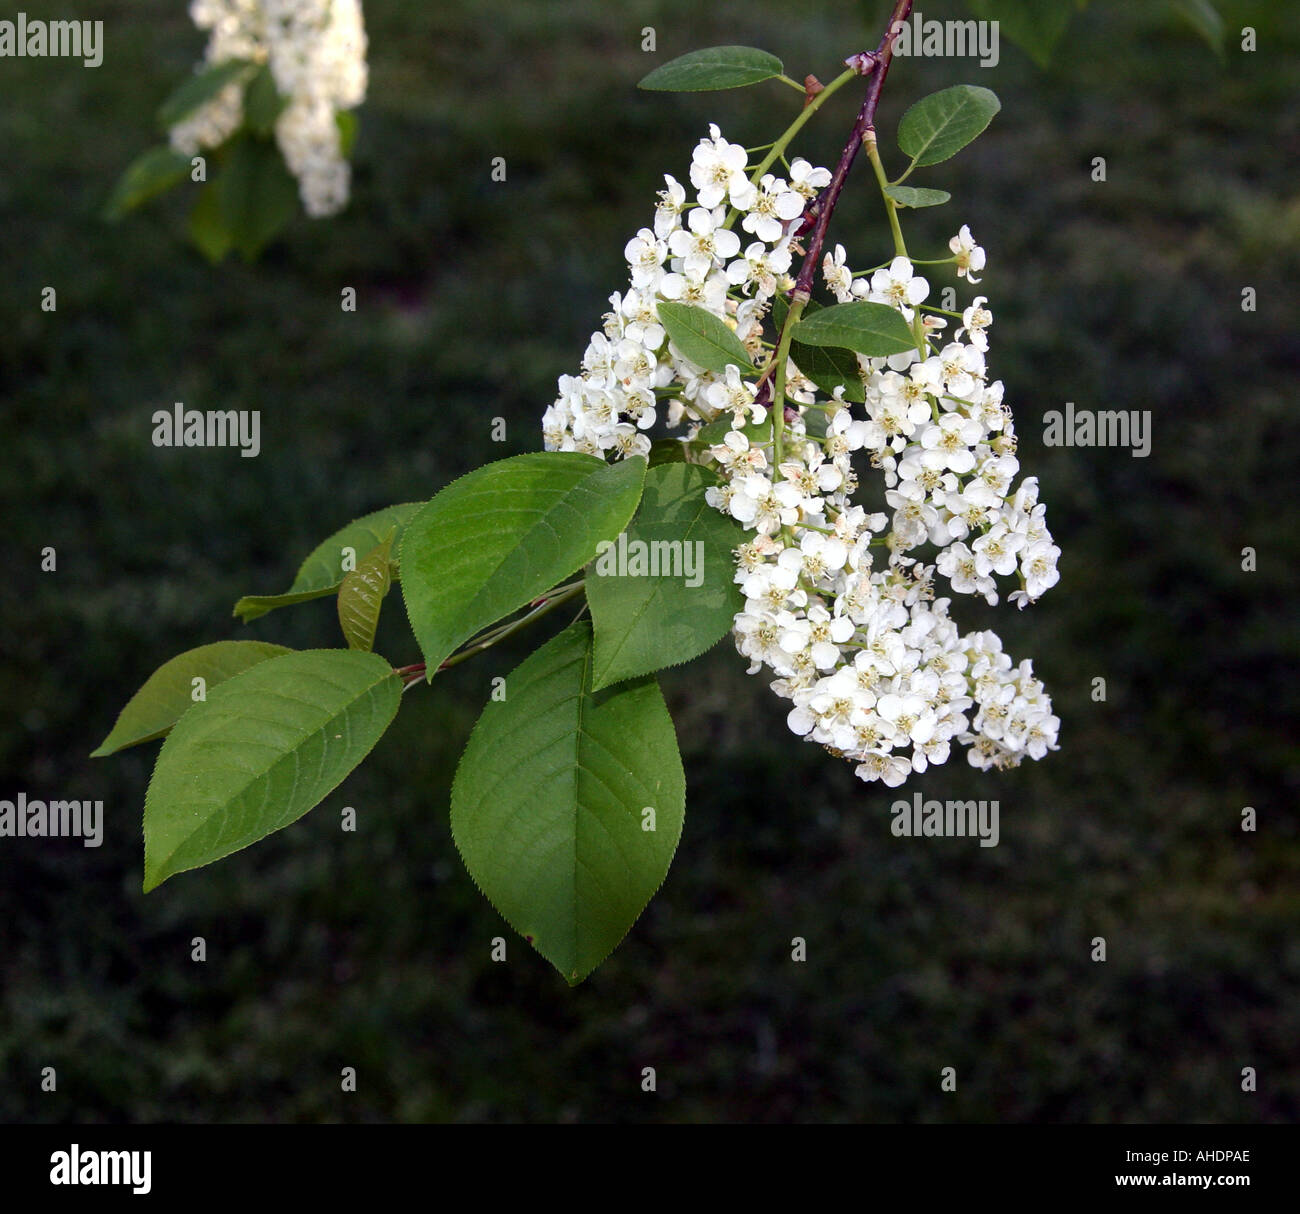 Hanging blossoms of the Common Chokecherry tree Stock Photo - Alamy